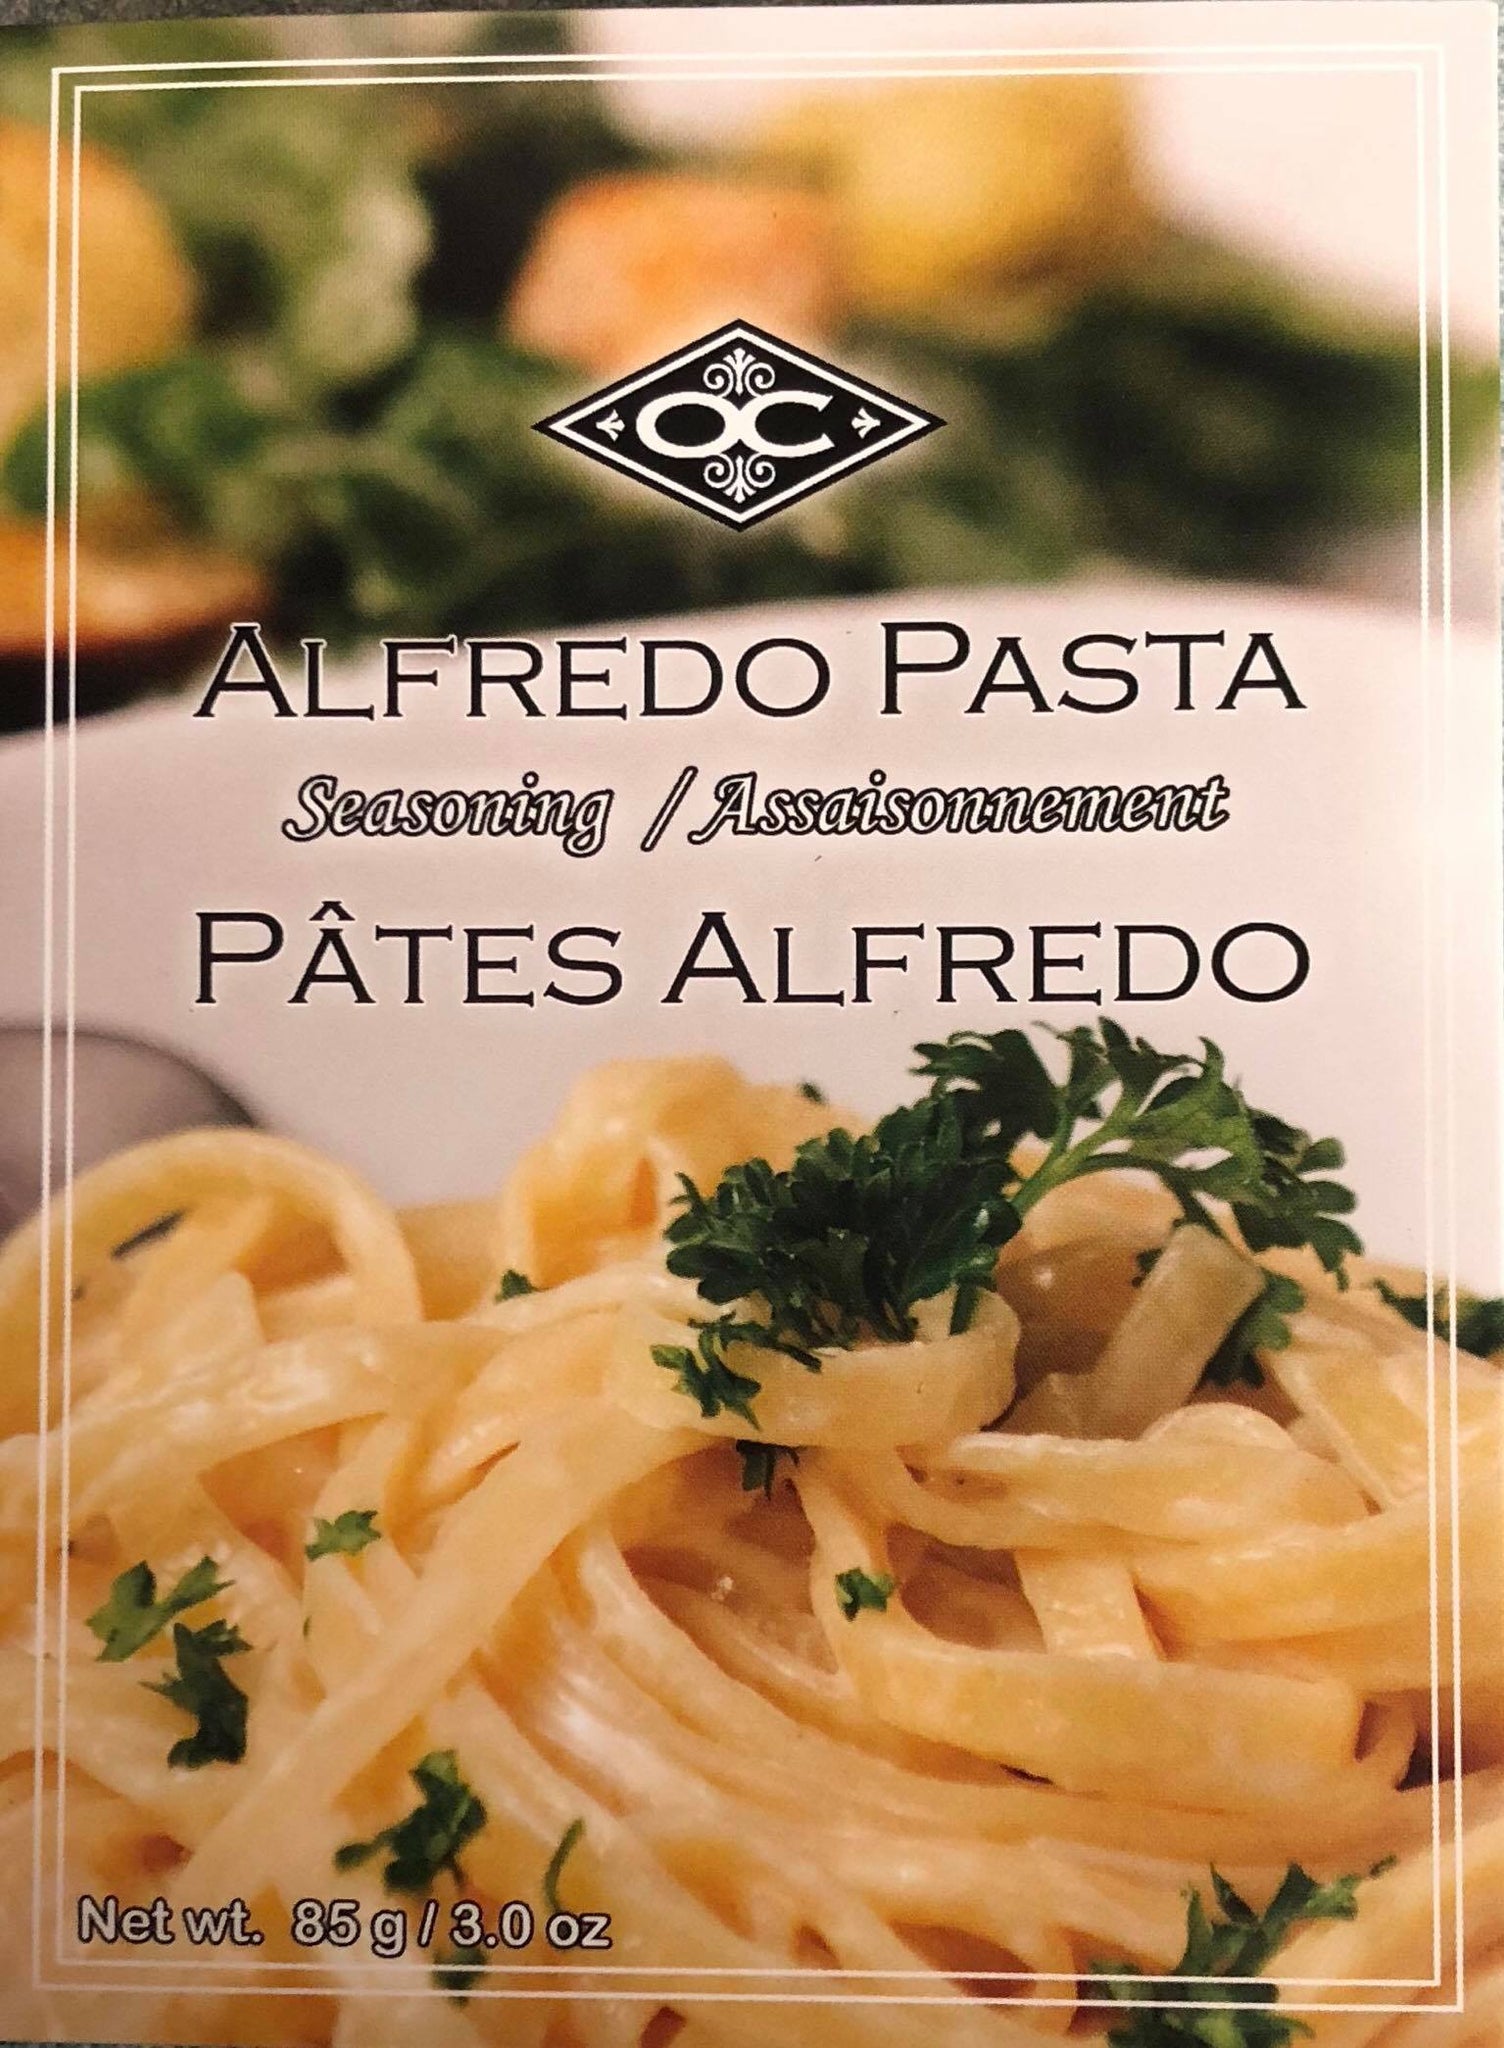 Orange Crate -Alfredo Pasta Seasoning